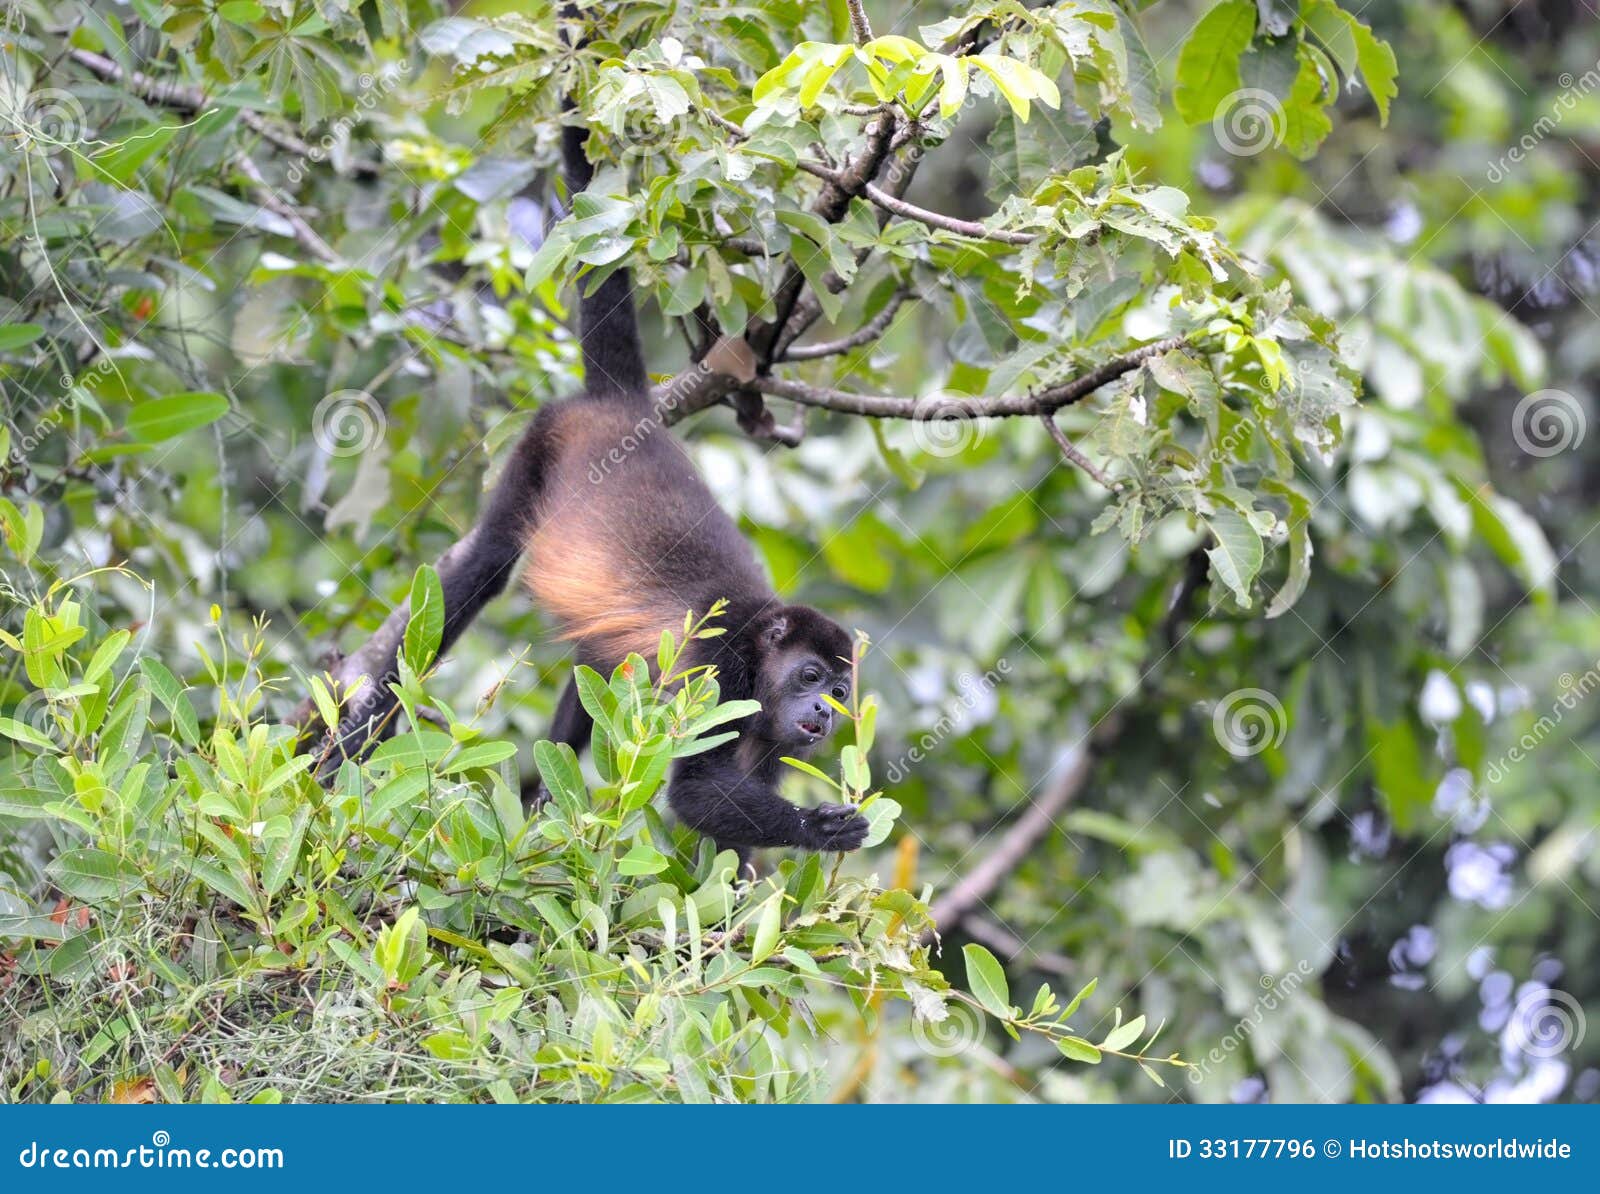 howler monkey feeding hanging from tail, refugio de vida silvestre cuero y salado, honduras, central america